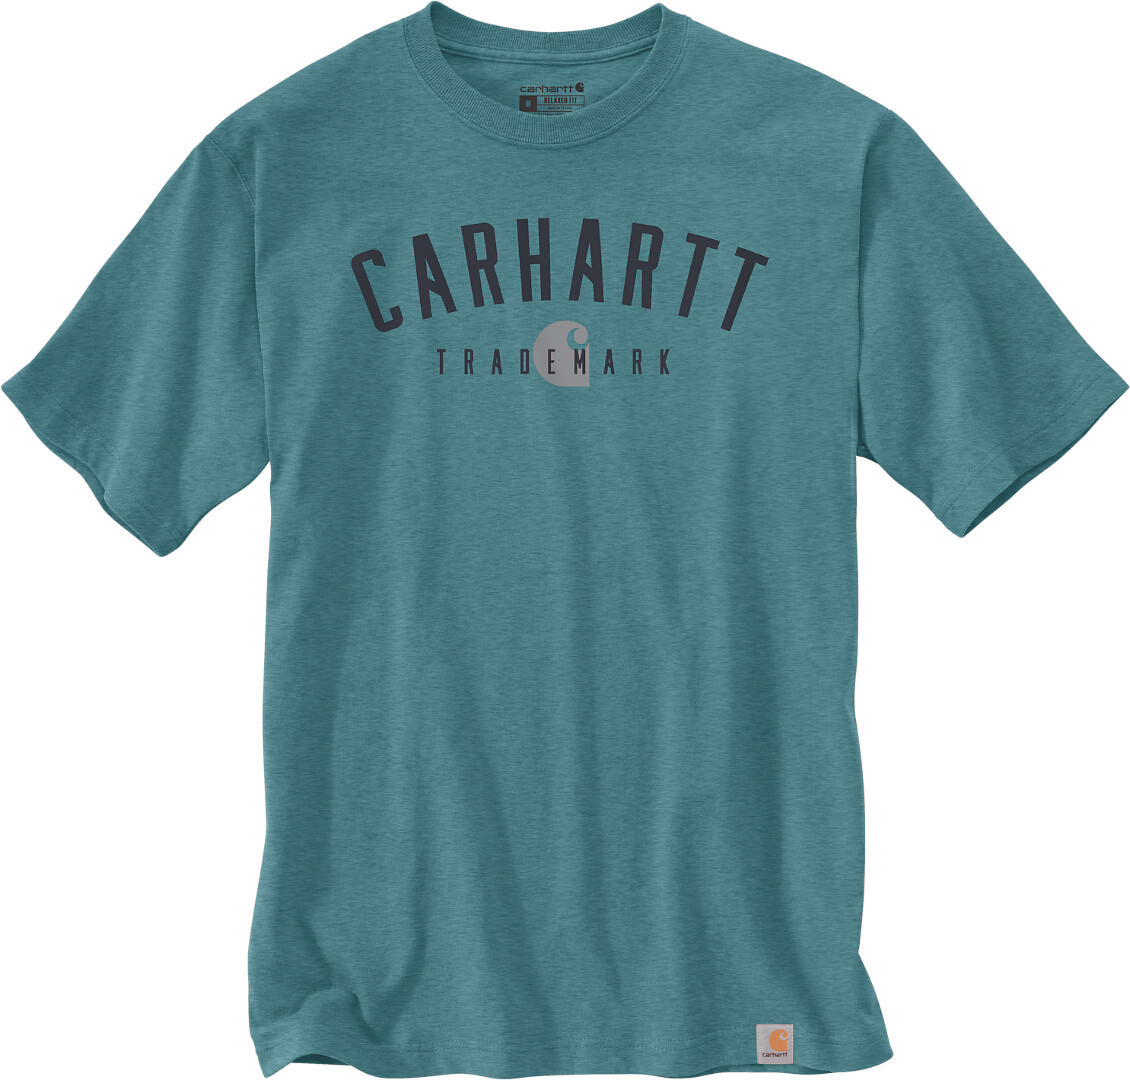 Image of Carhartt Workwear Graphic Maglietta, blu, dimensione S